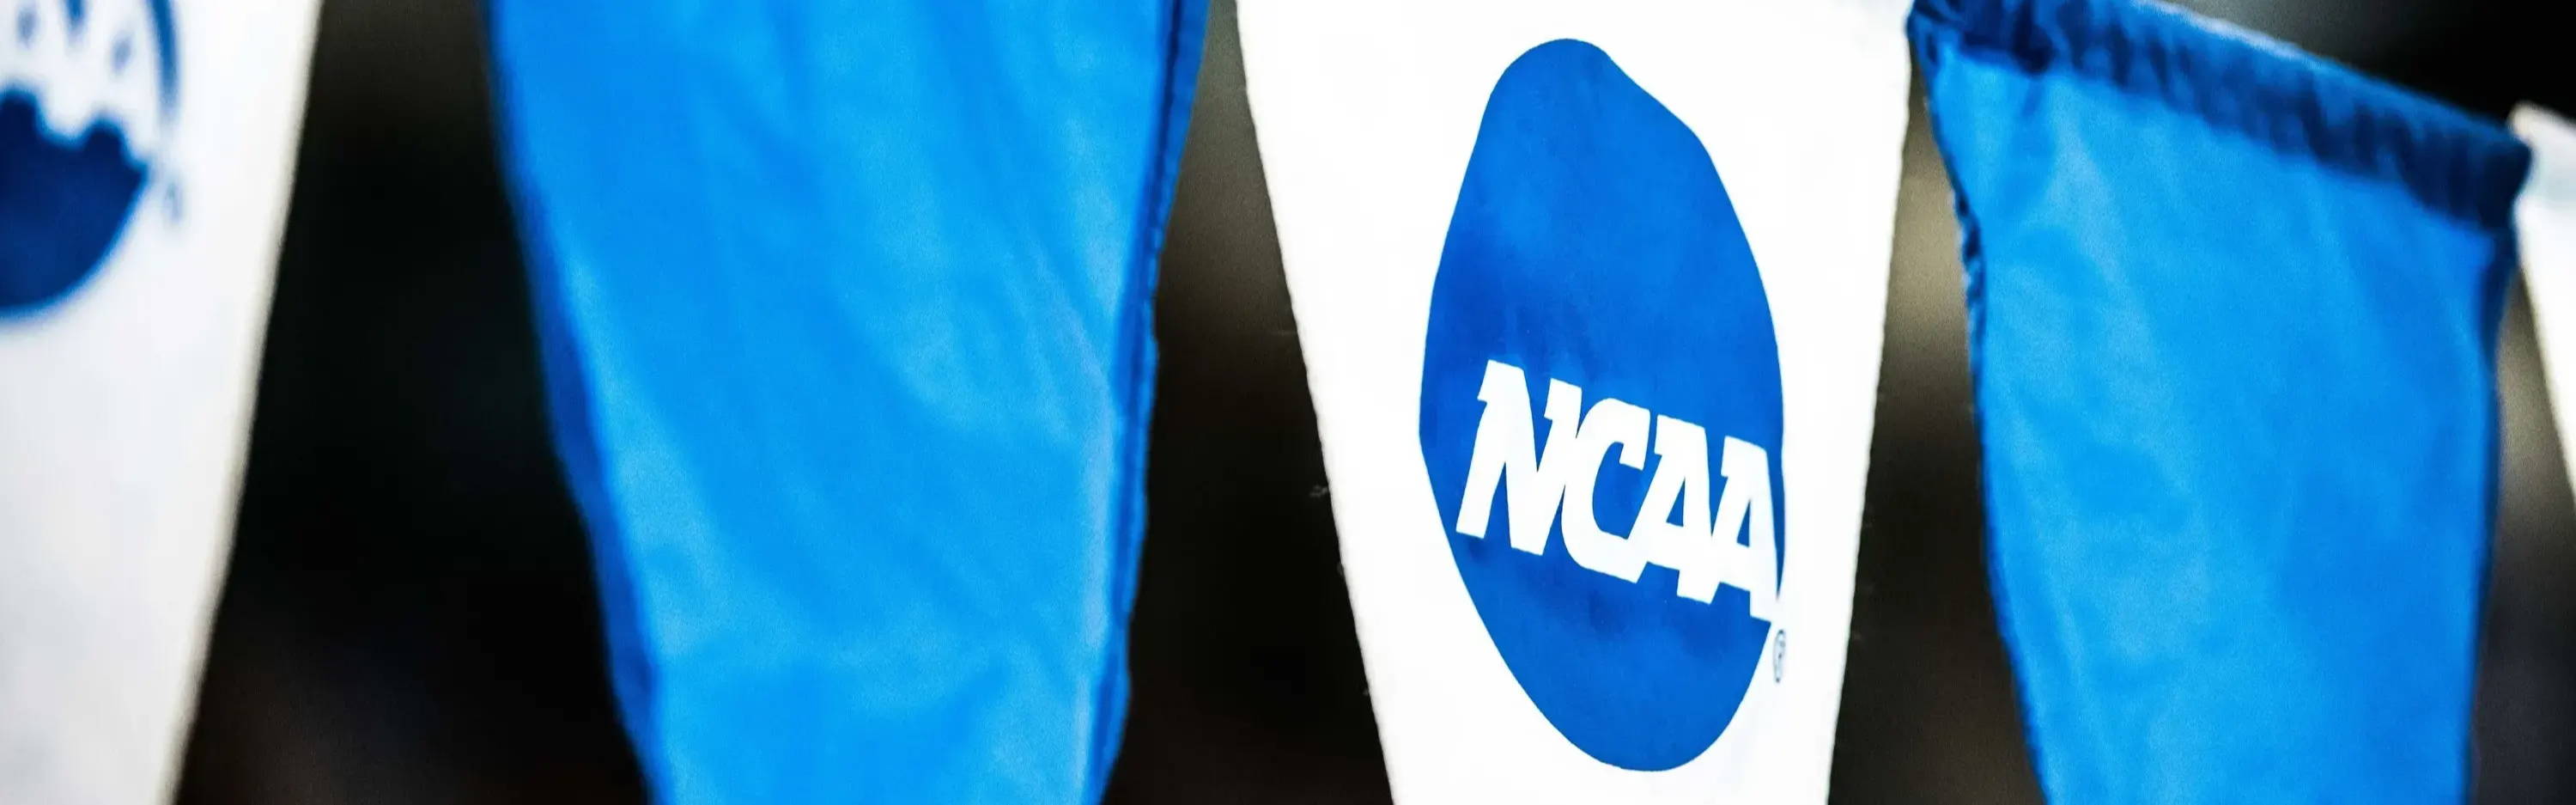 NCAA Logo on Banner